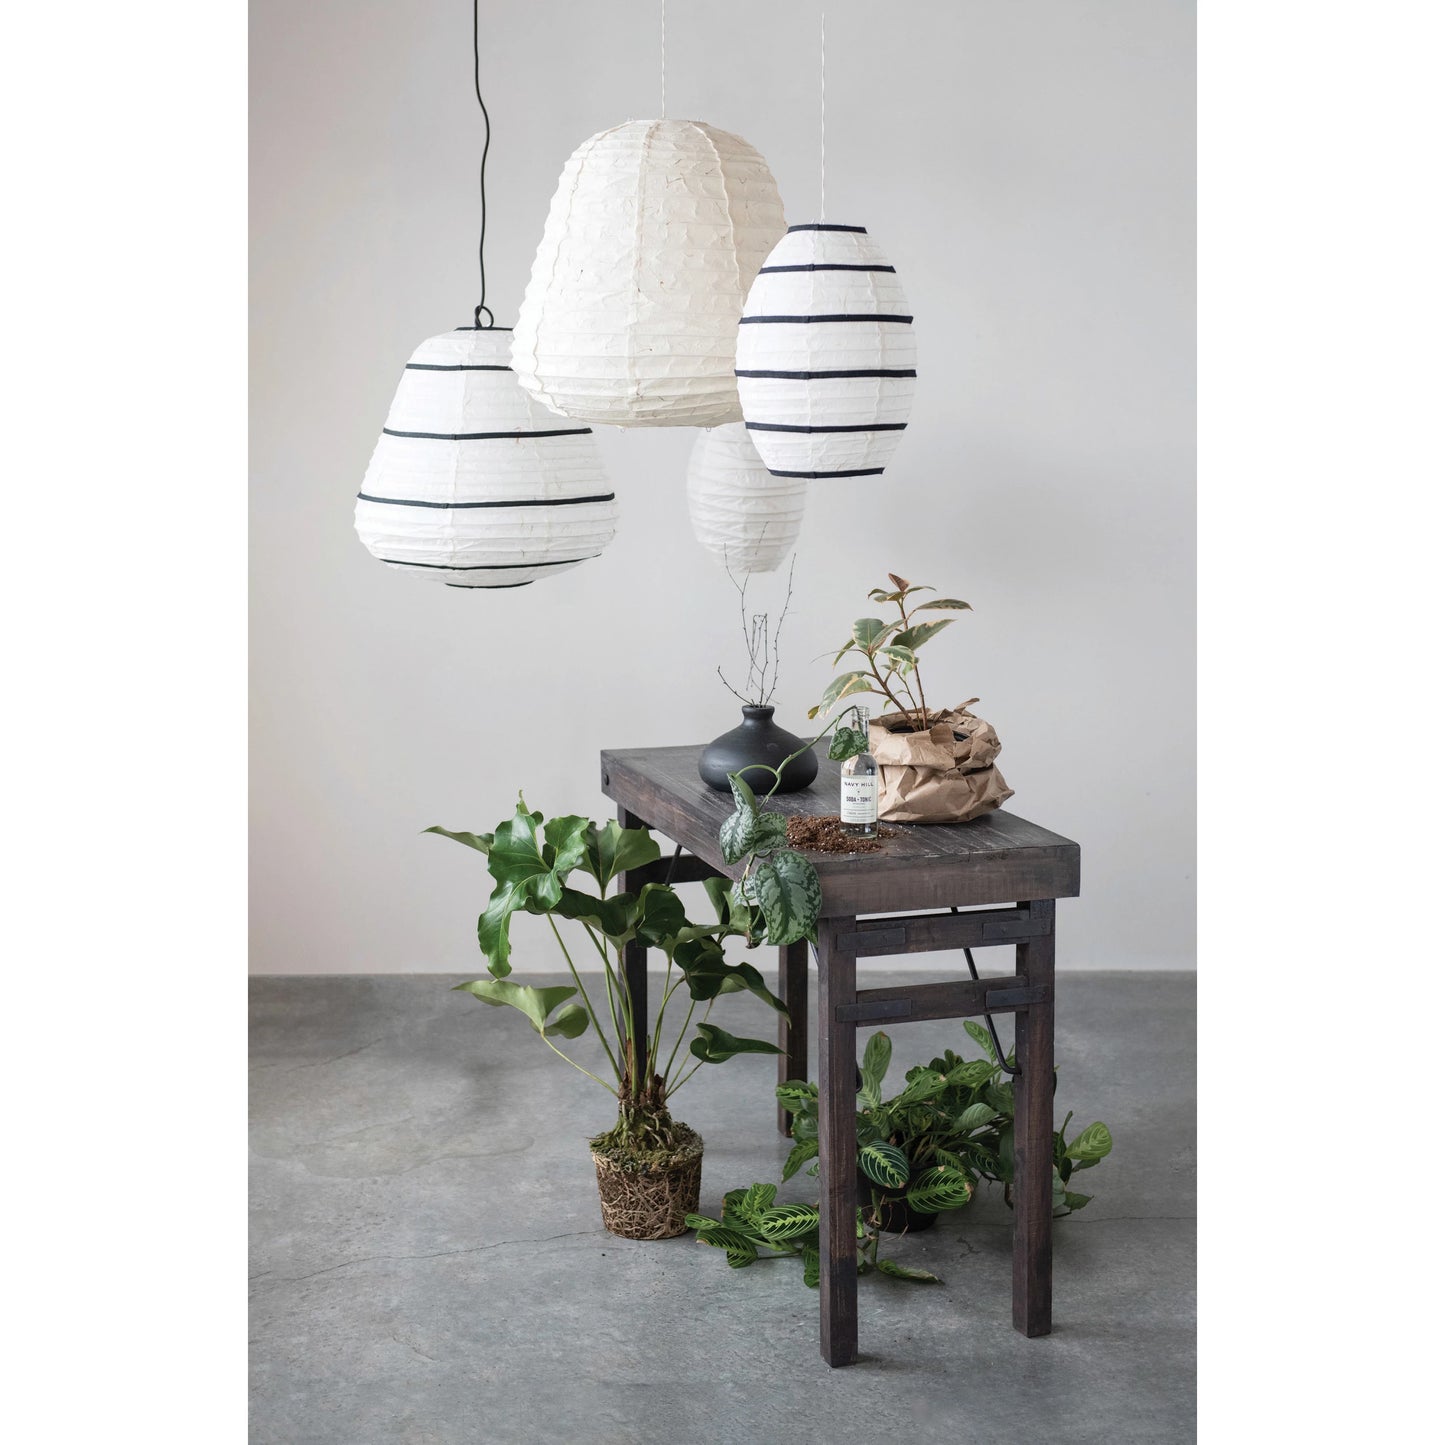 Handmade Paper Lantern Pendant Lamp with Fabric Stripes - Japandi Collection - #8981